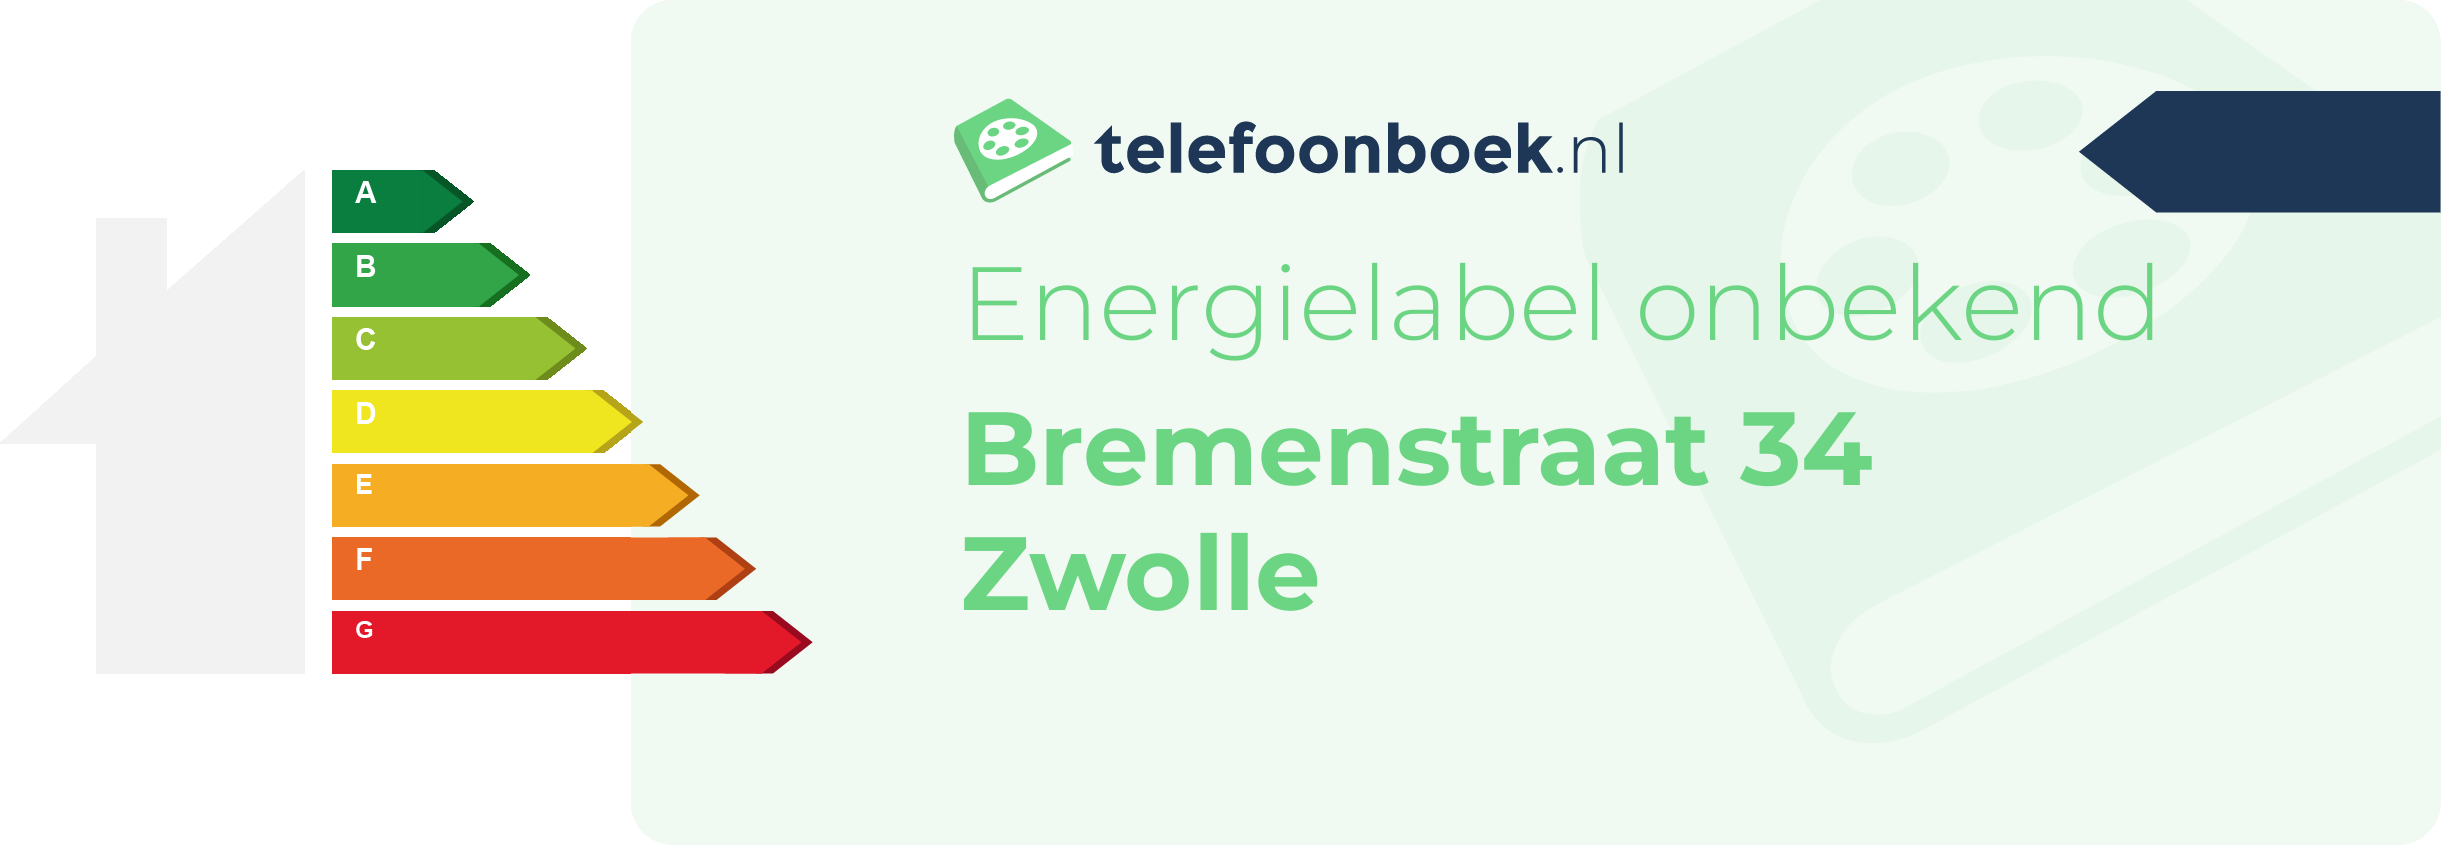 Energielabel Bremenstraat 34 Zwolle